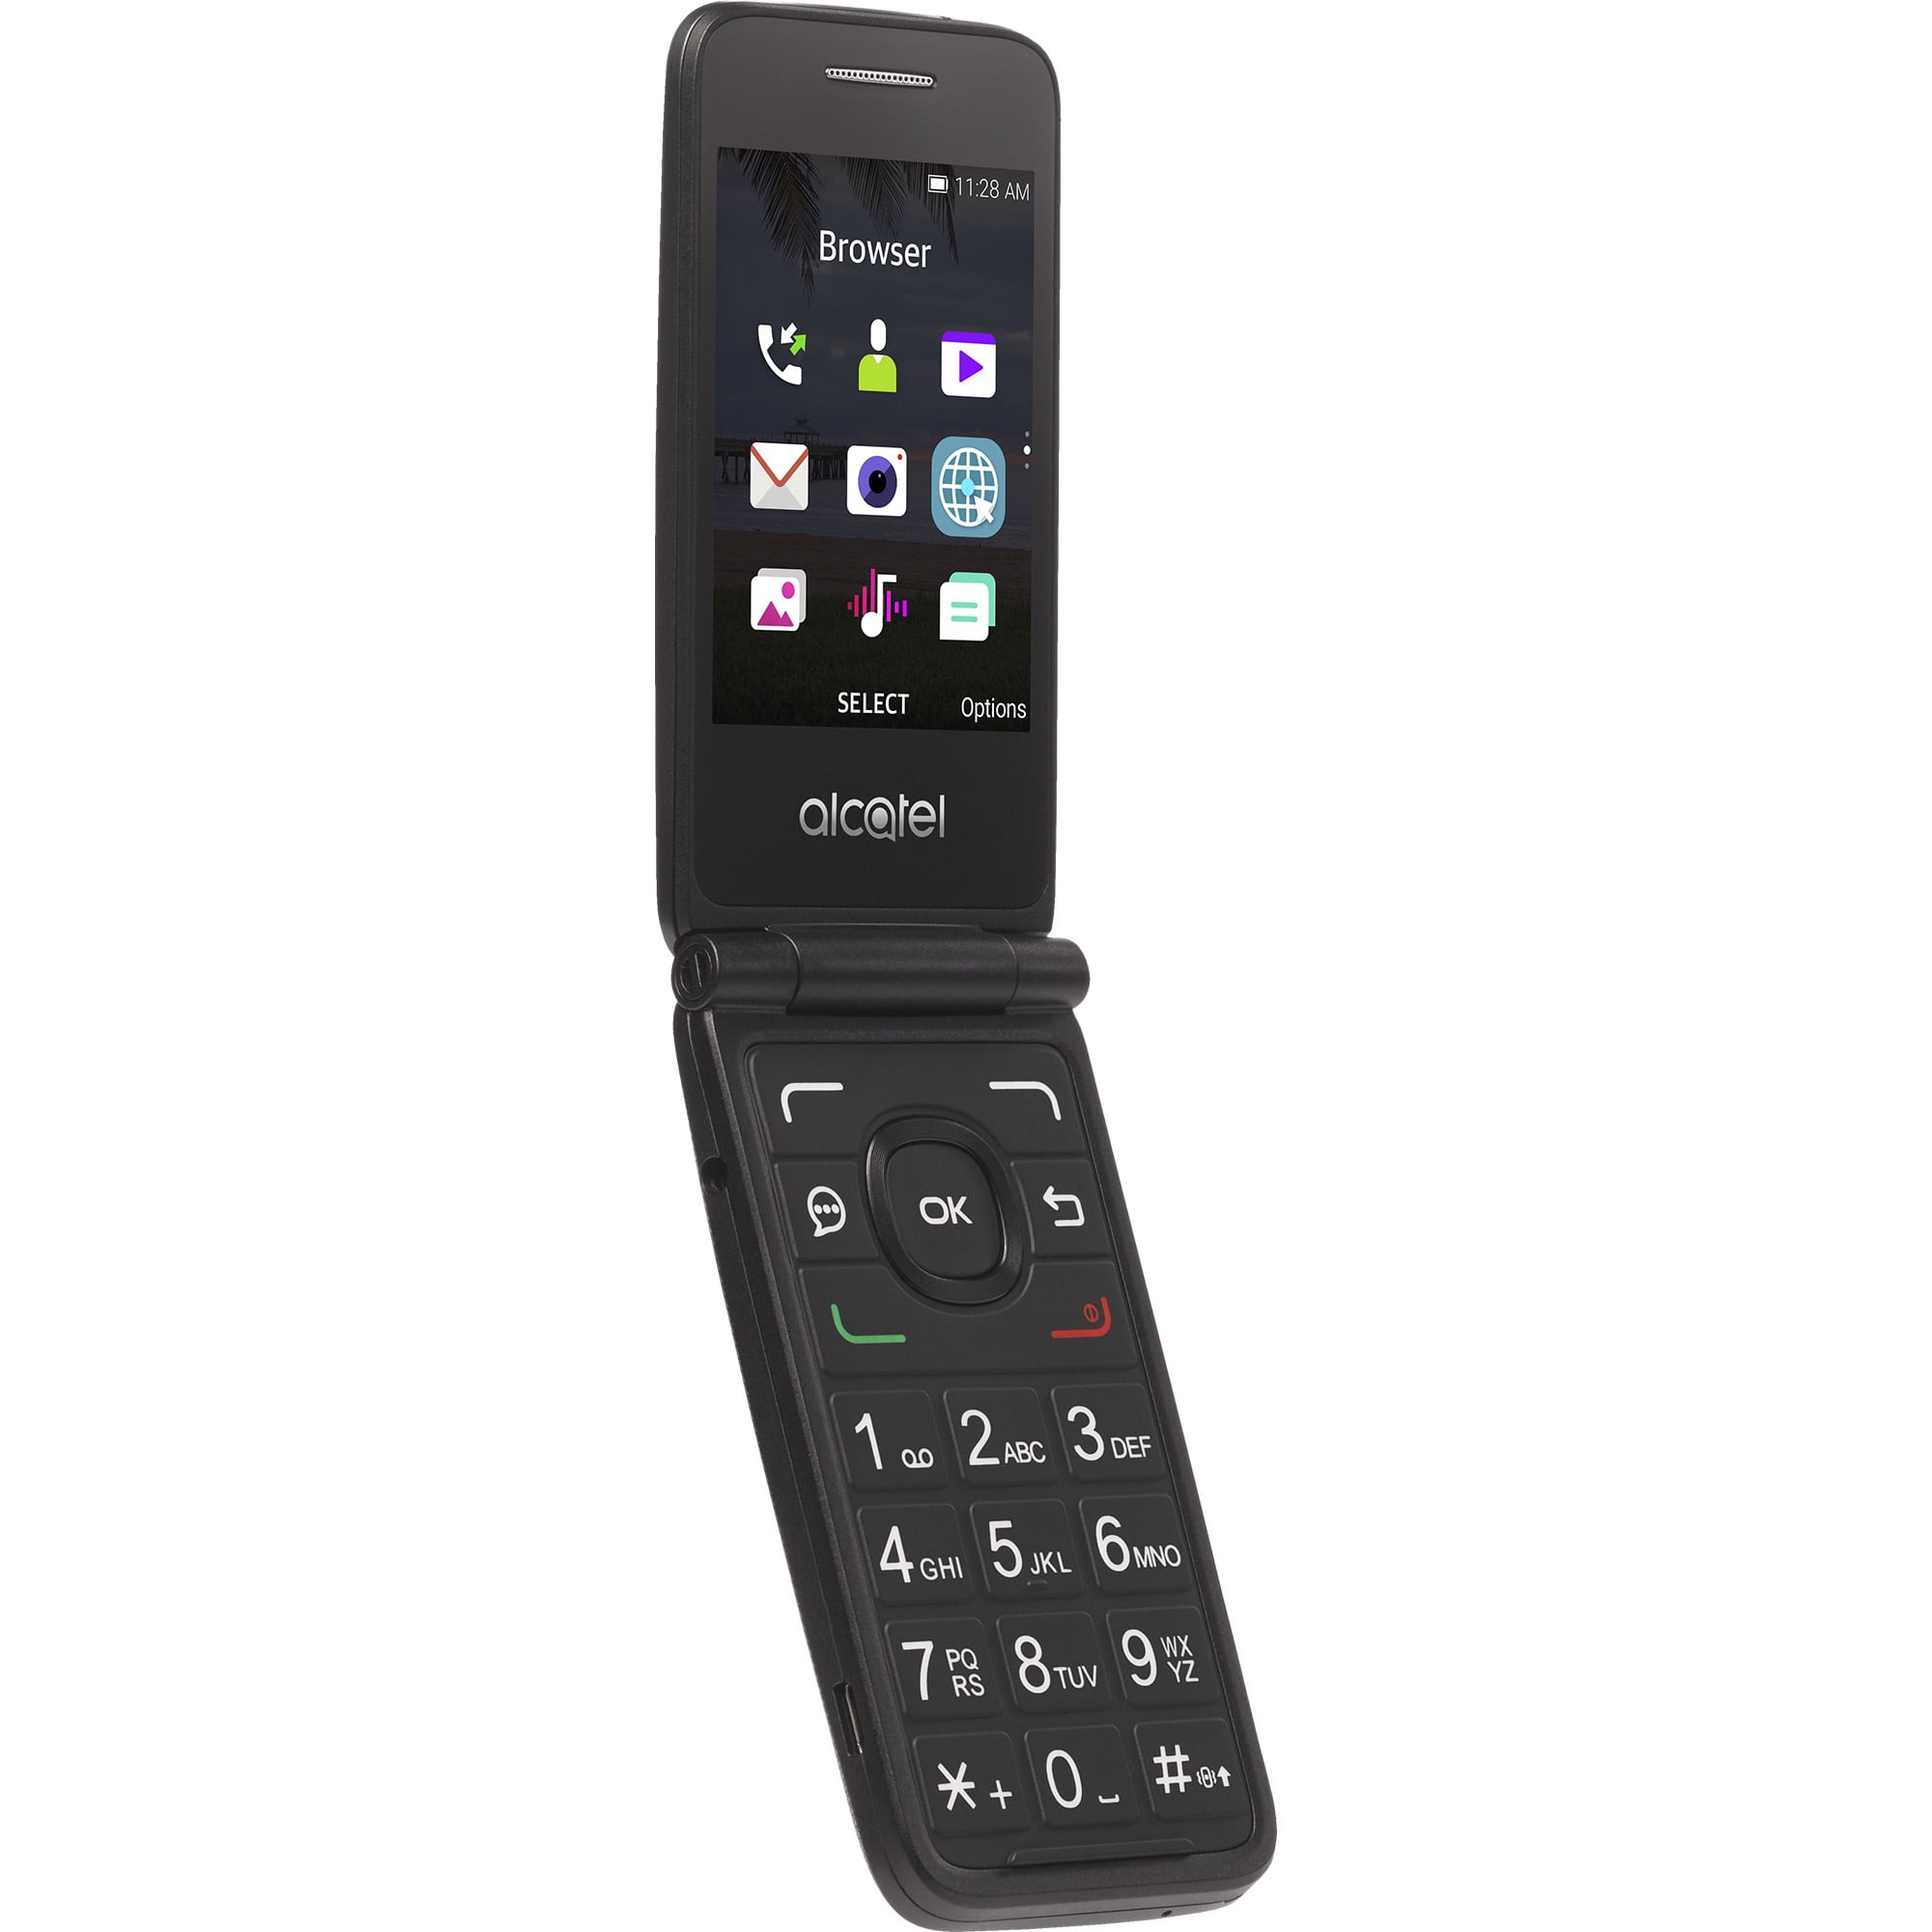 where can i buy a net10 phone